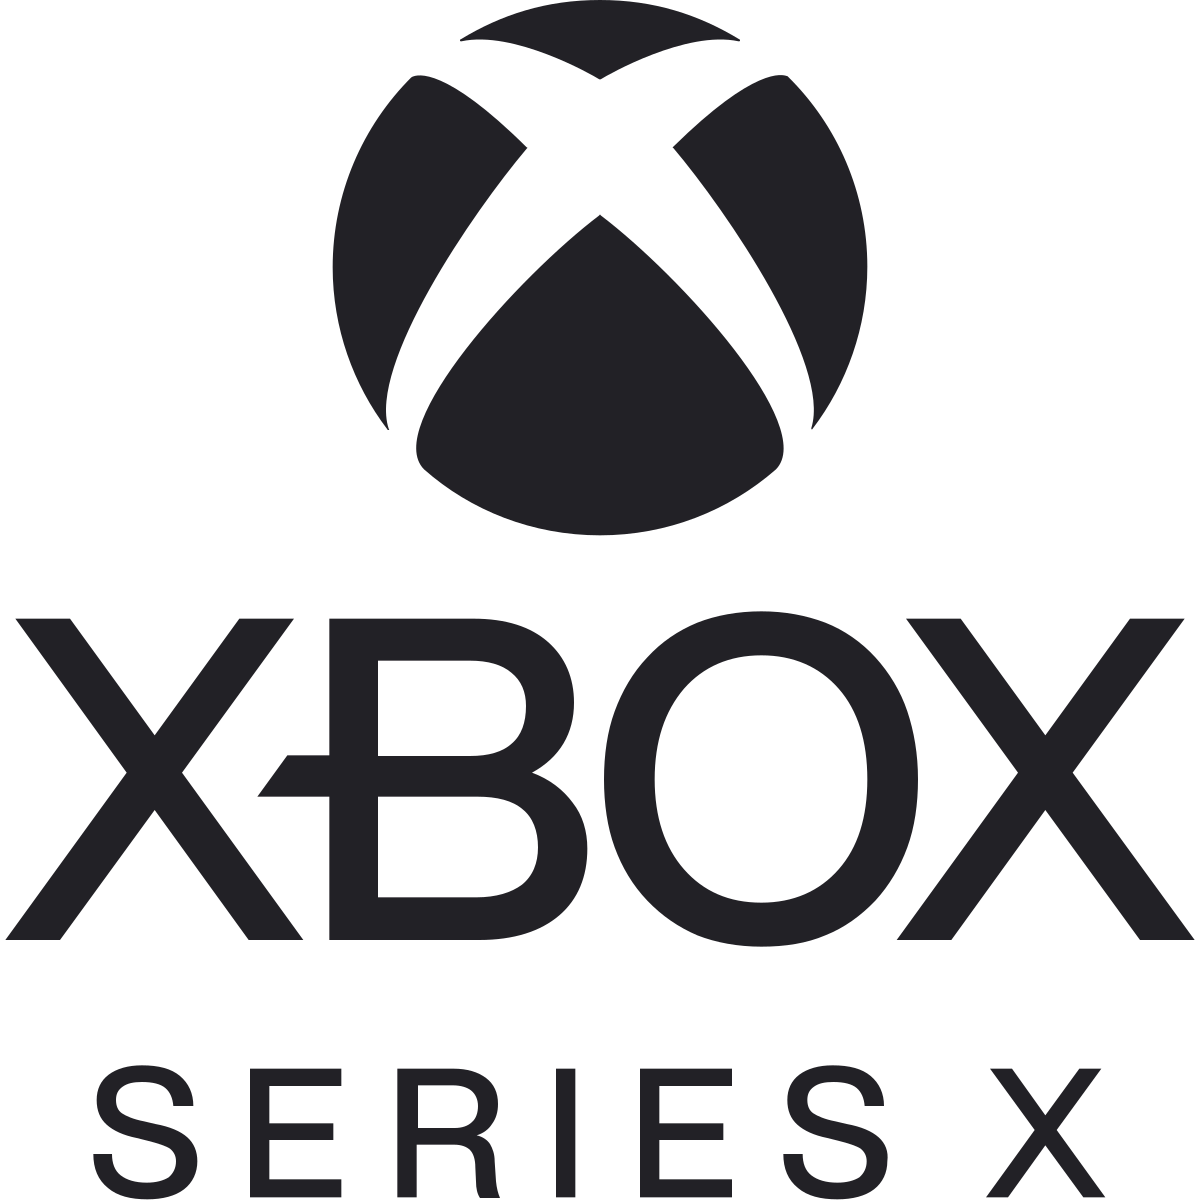 《Xbox》Series X 标志